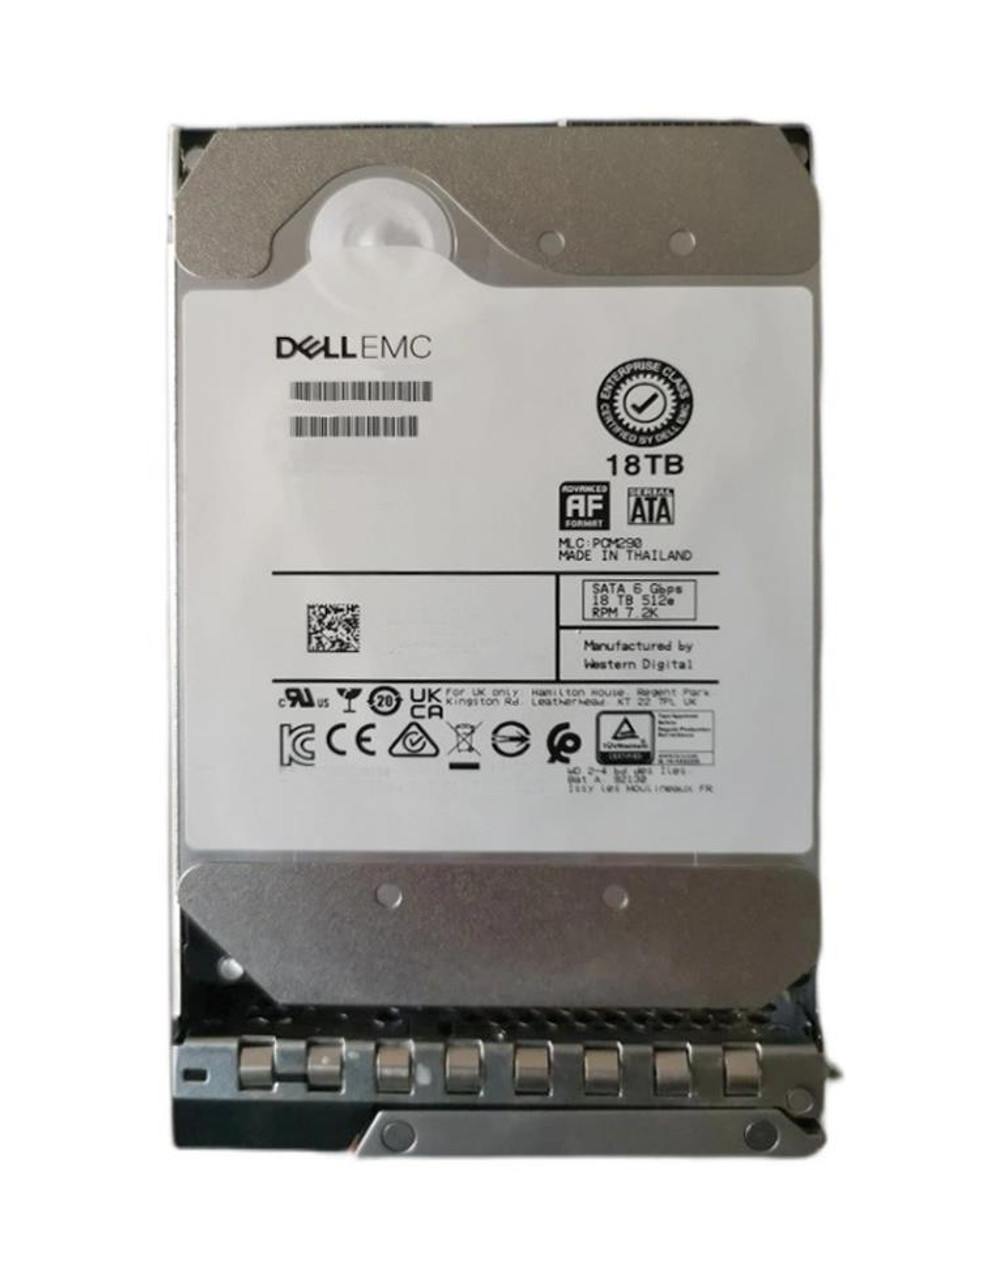 Dell EMC 18TB 7200RPM SAS 12Gbps Hot Swap (512e) 3.5-inch Internal Hard Drive